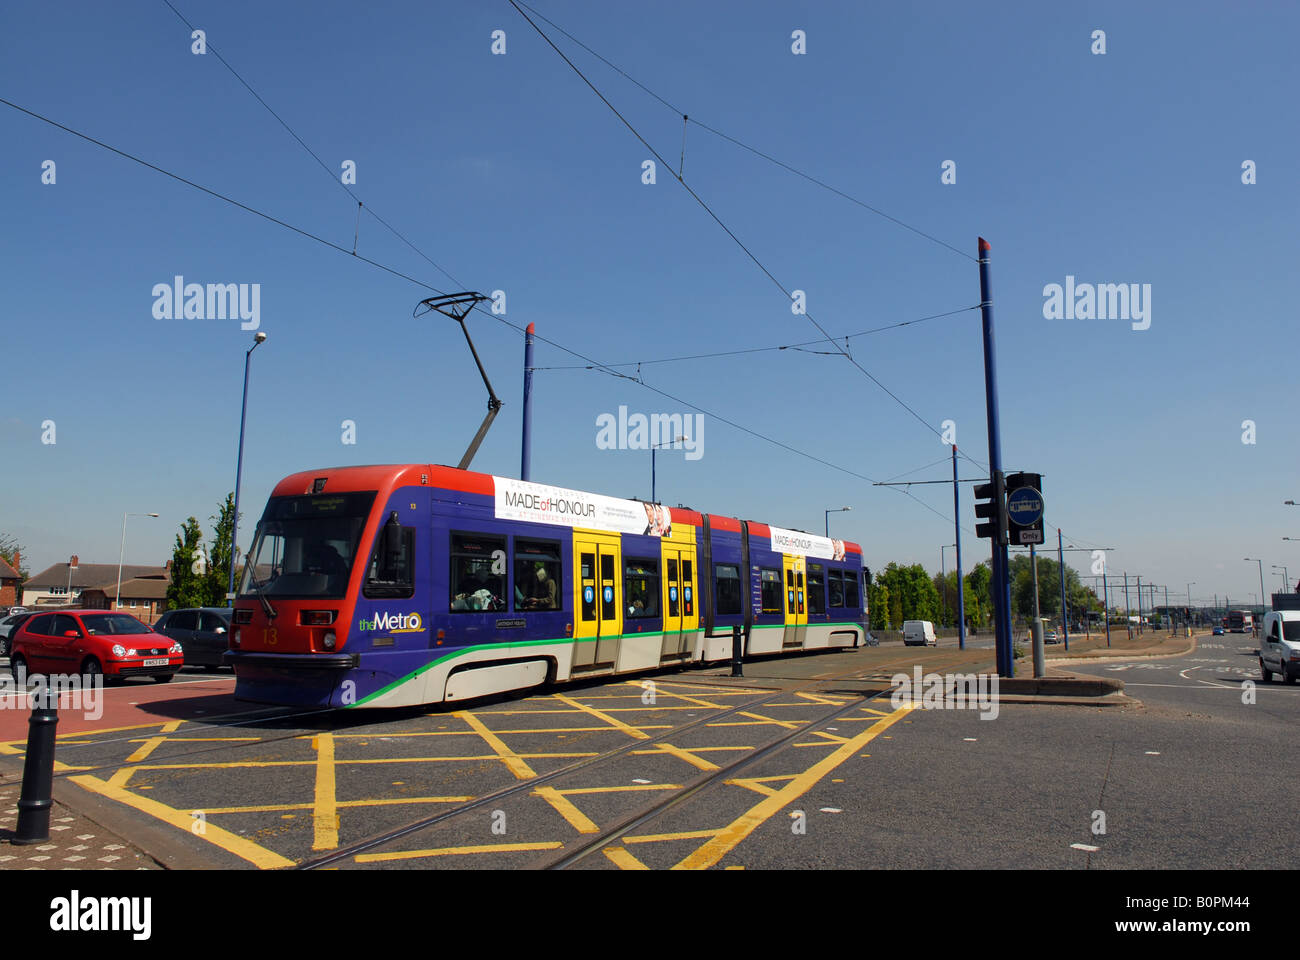 The Metro tram called Anthony Nolan arriving in Wolverhampton Stock Photo